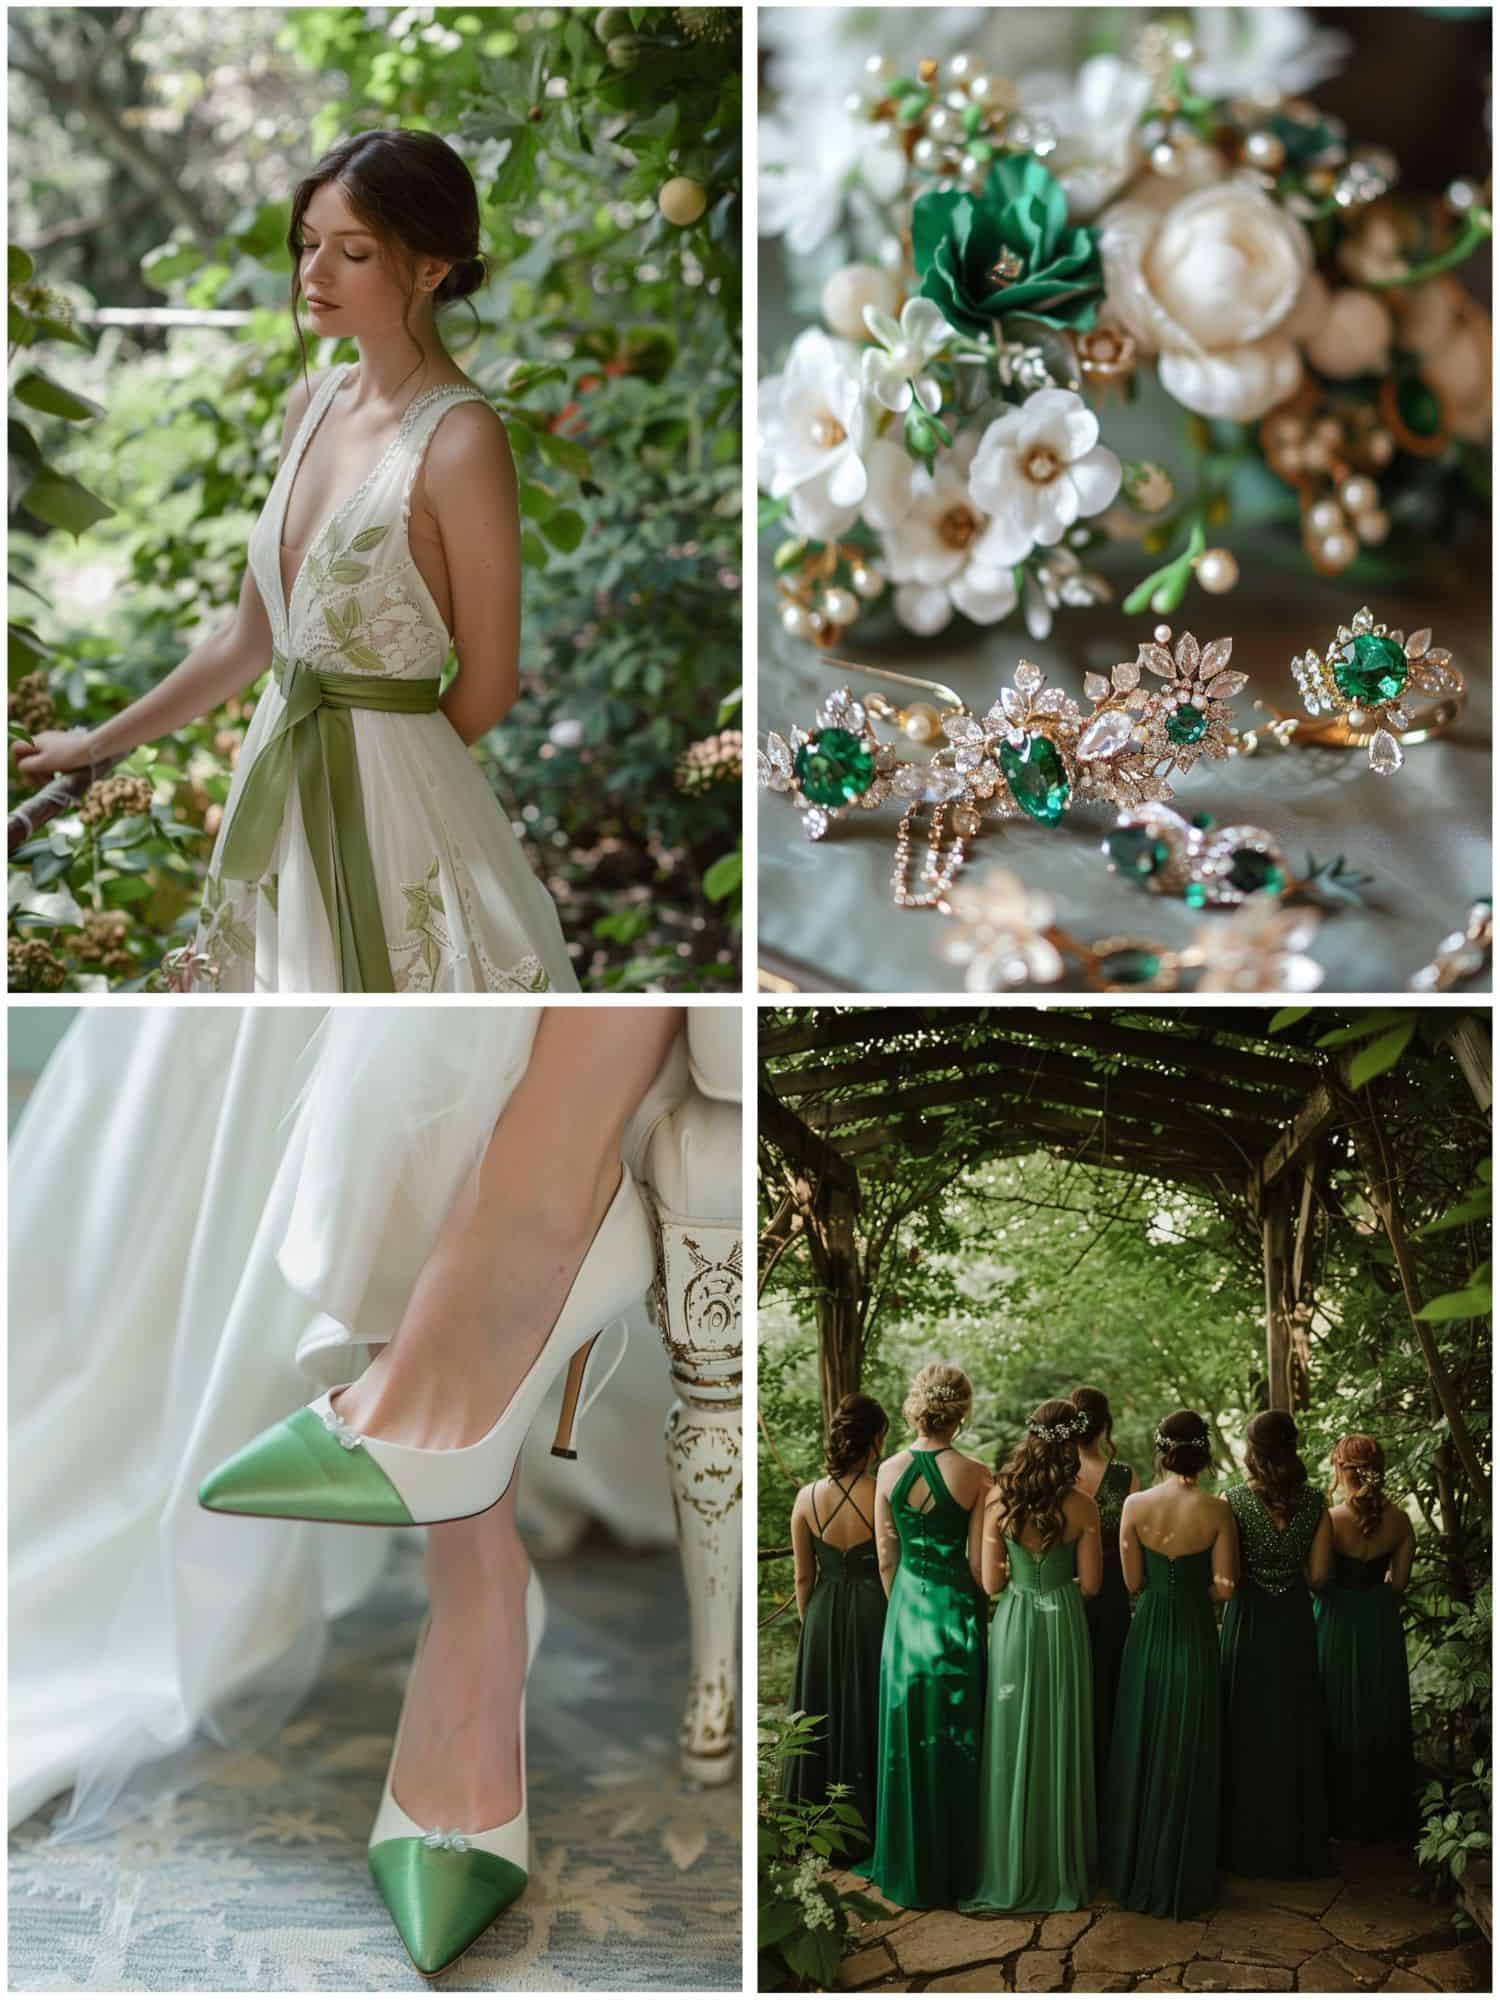 wedding attire in green and white